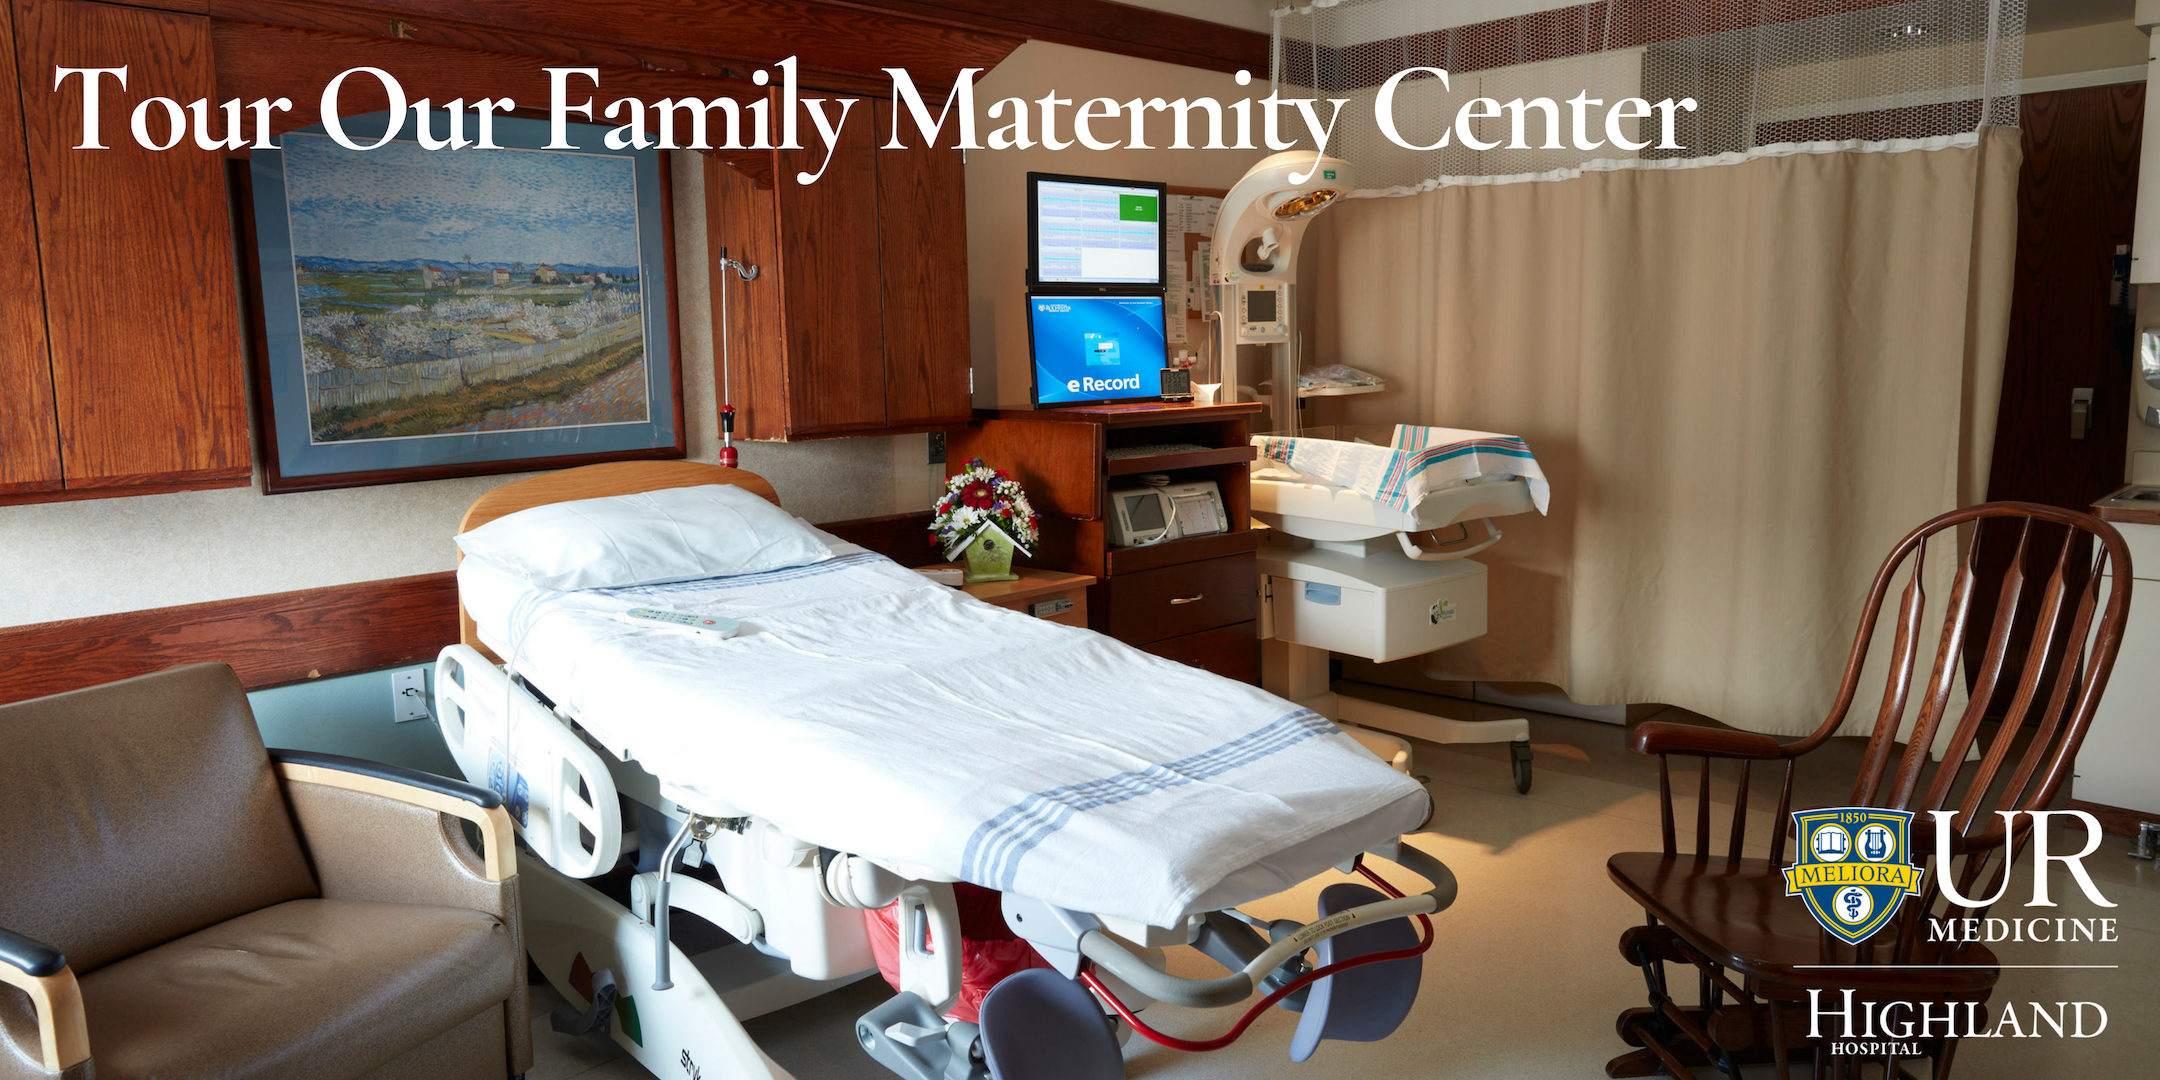 Family Maternity Center Tour - Monday, 2/3/20